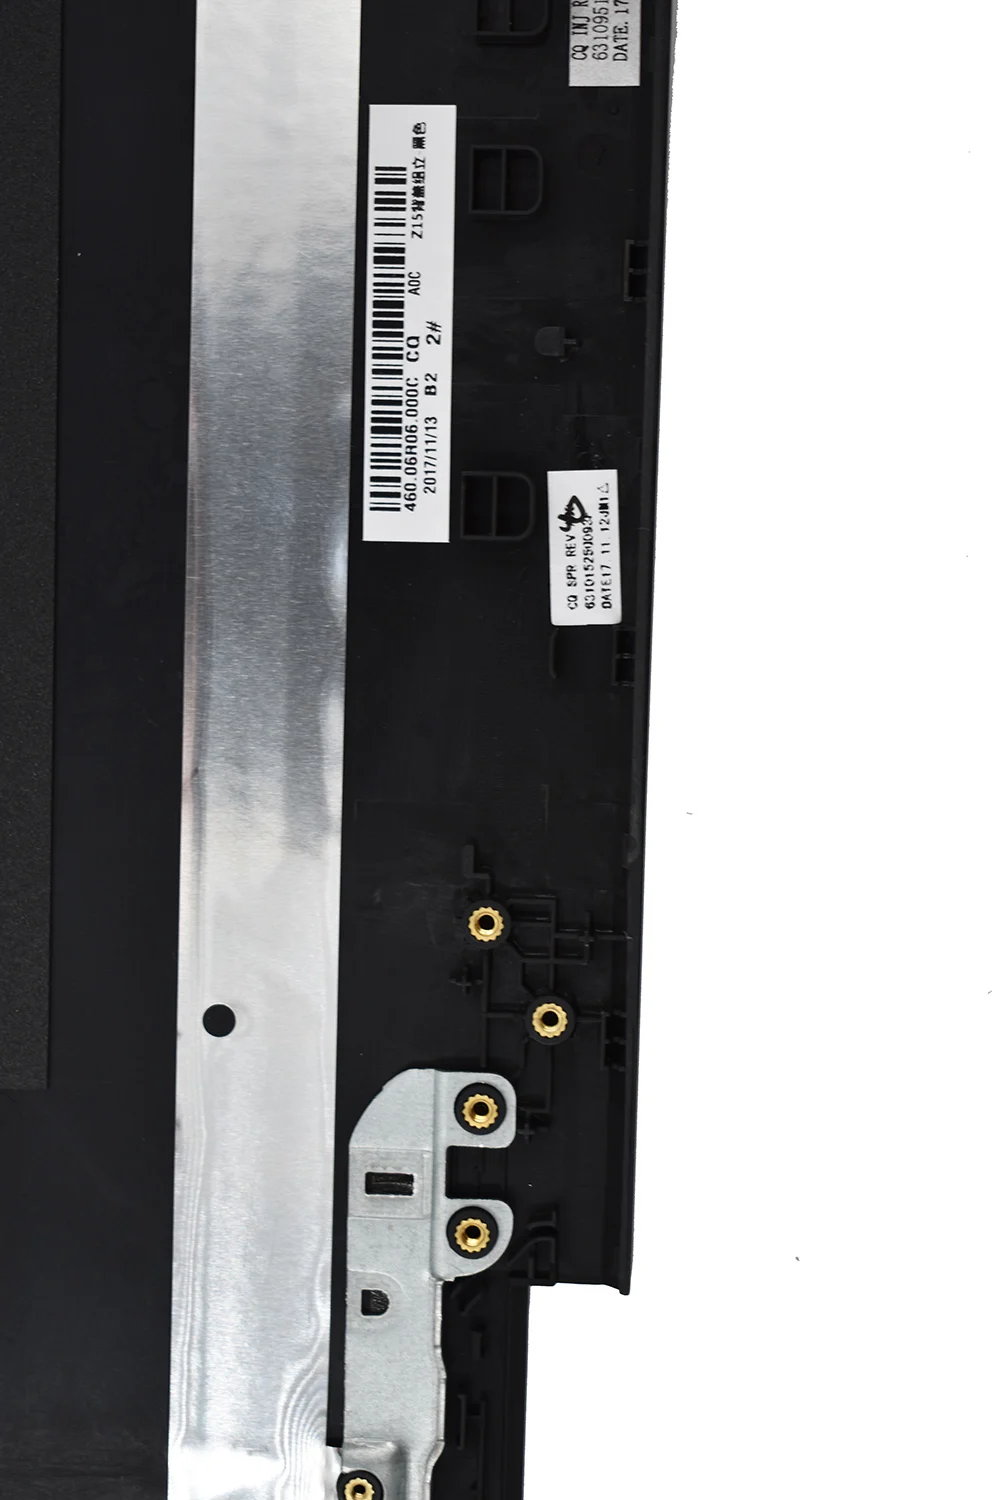 New LCD Back Cover Top Case Rear Lid 8S5CB0K85923 For Lenovo Ideapad 700-15ISK